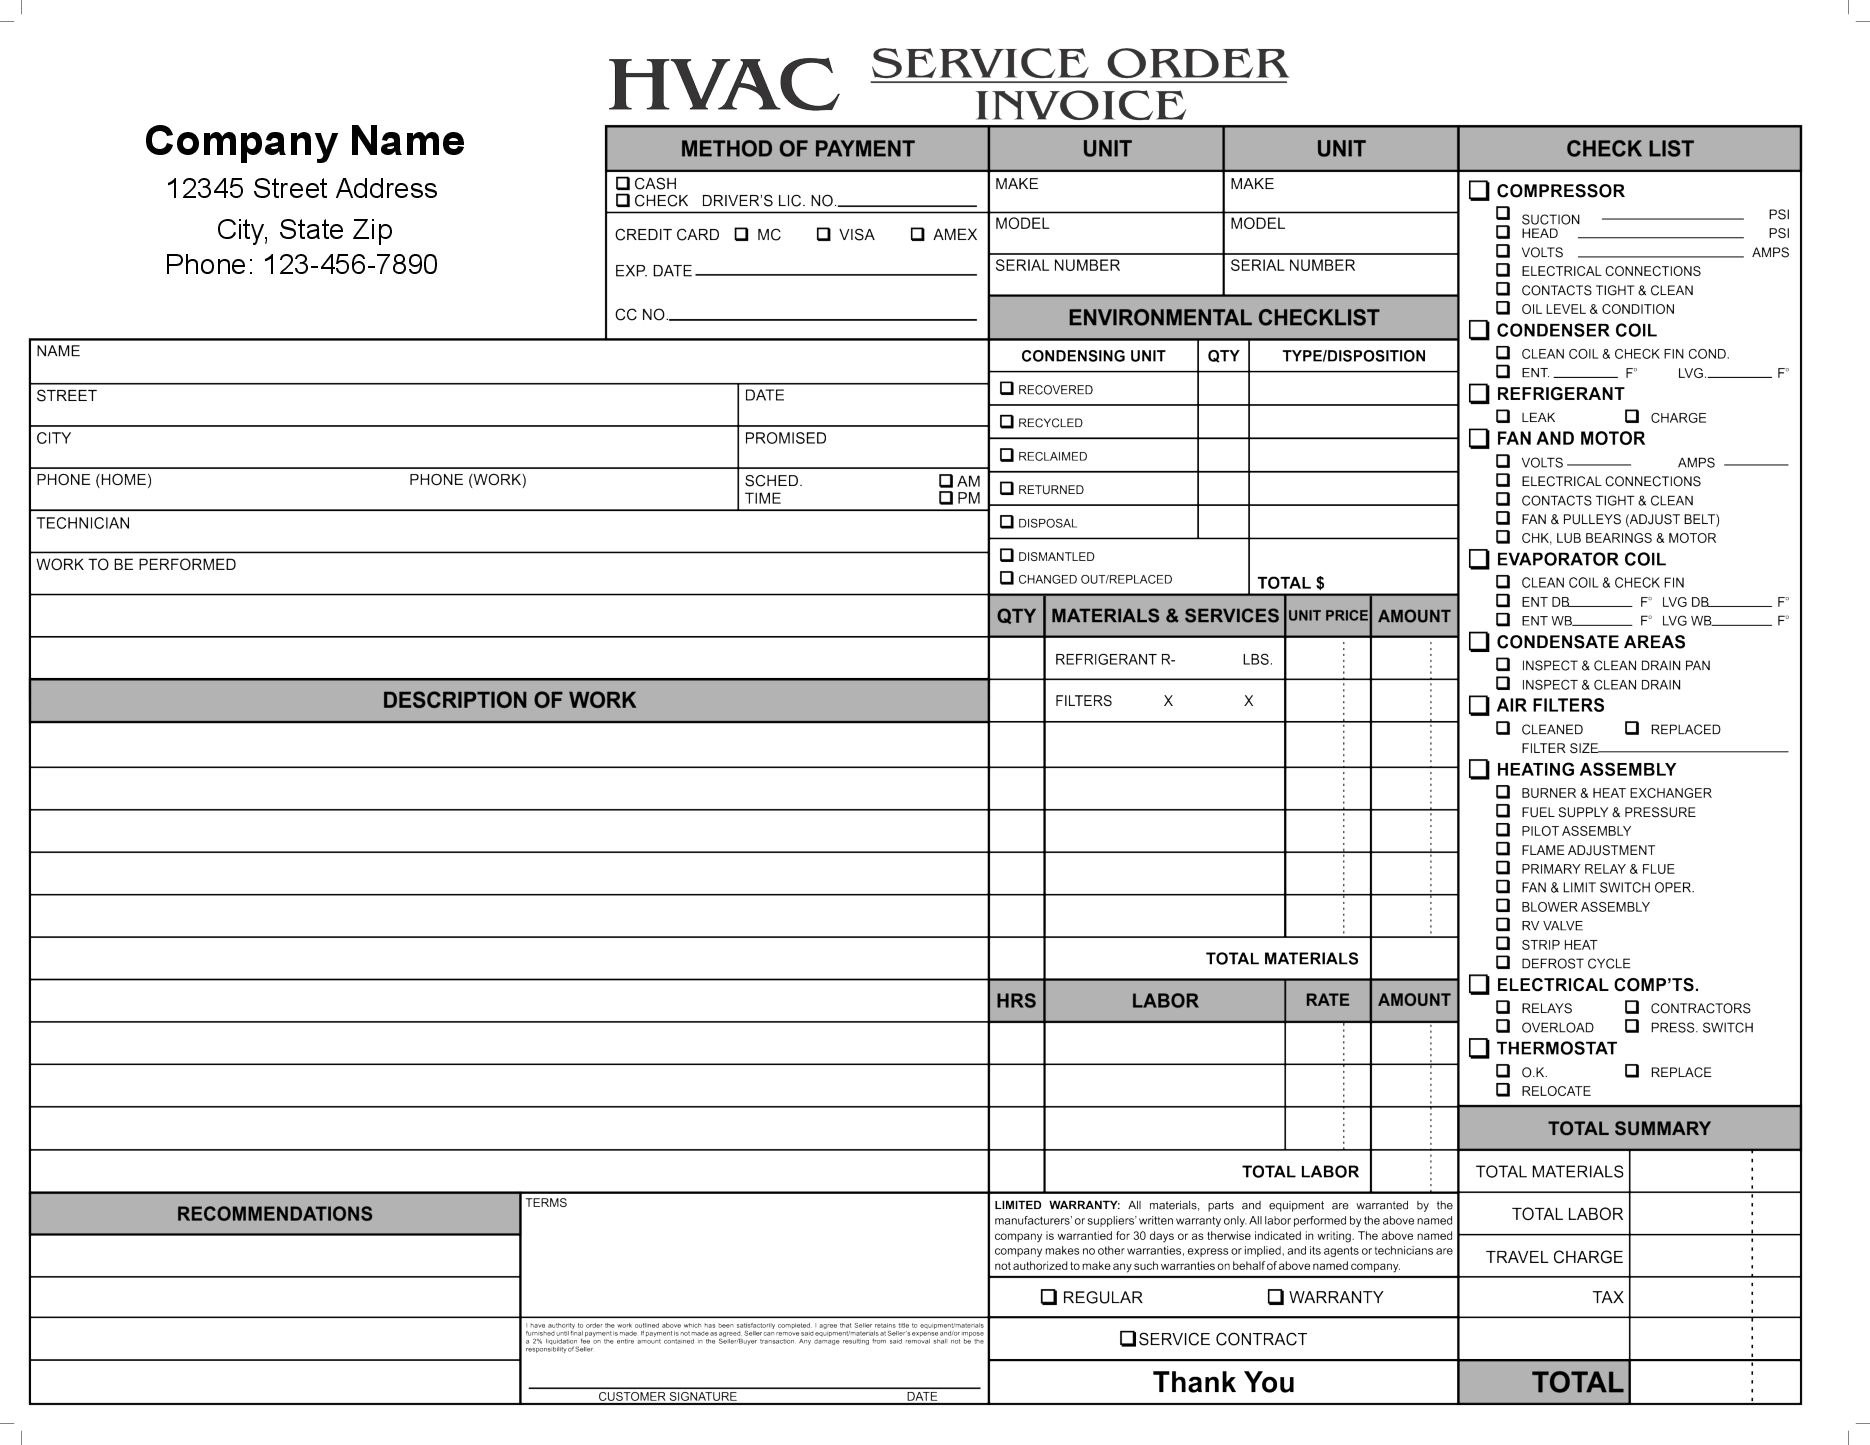 Hvac Invoice Template Free Top Invoice Templates Hvac Invoice with Hvac Service Invoice Template Free